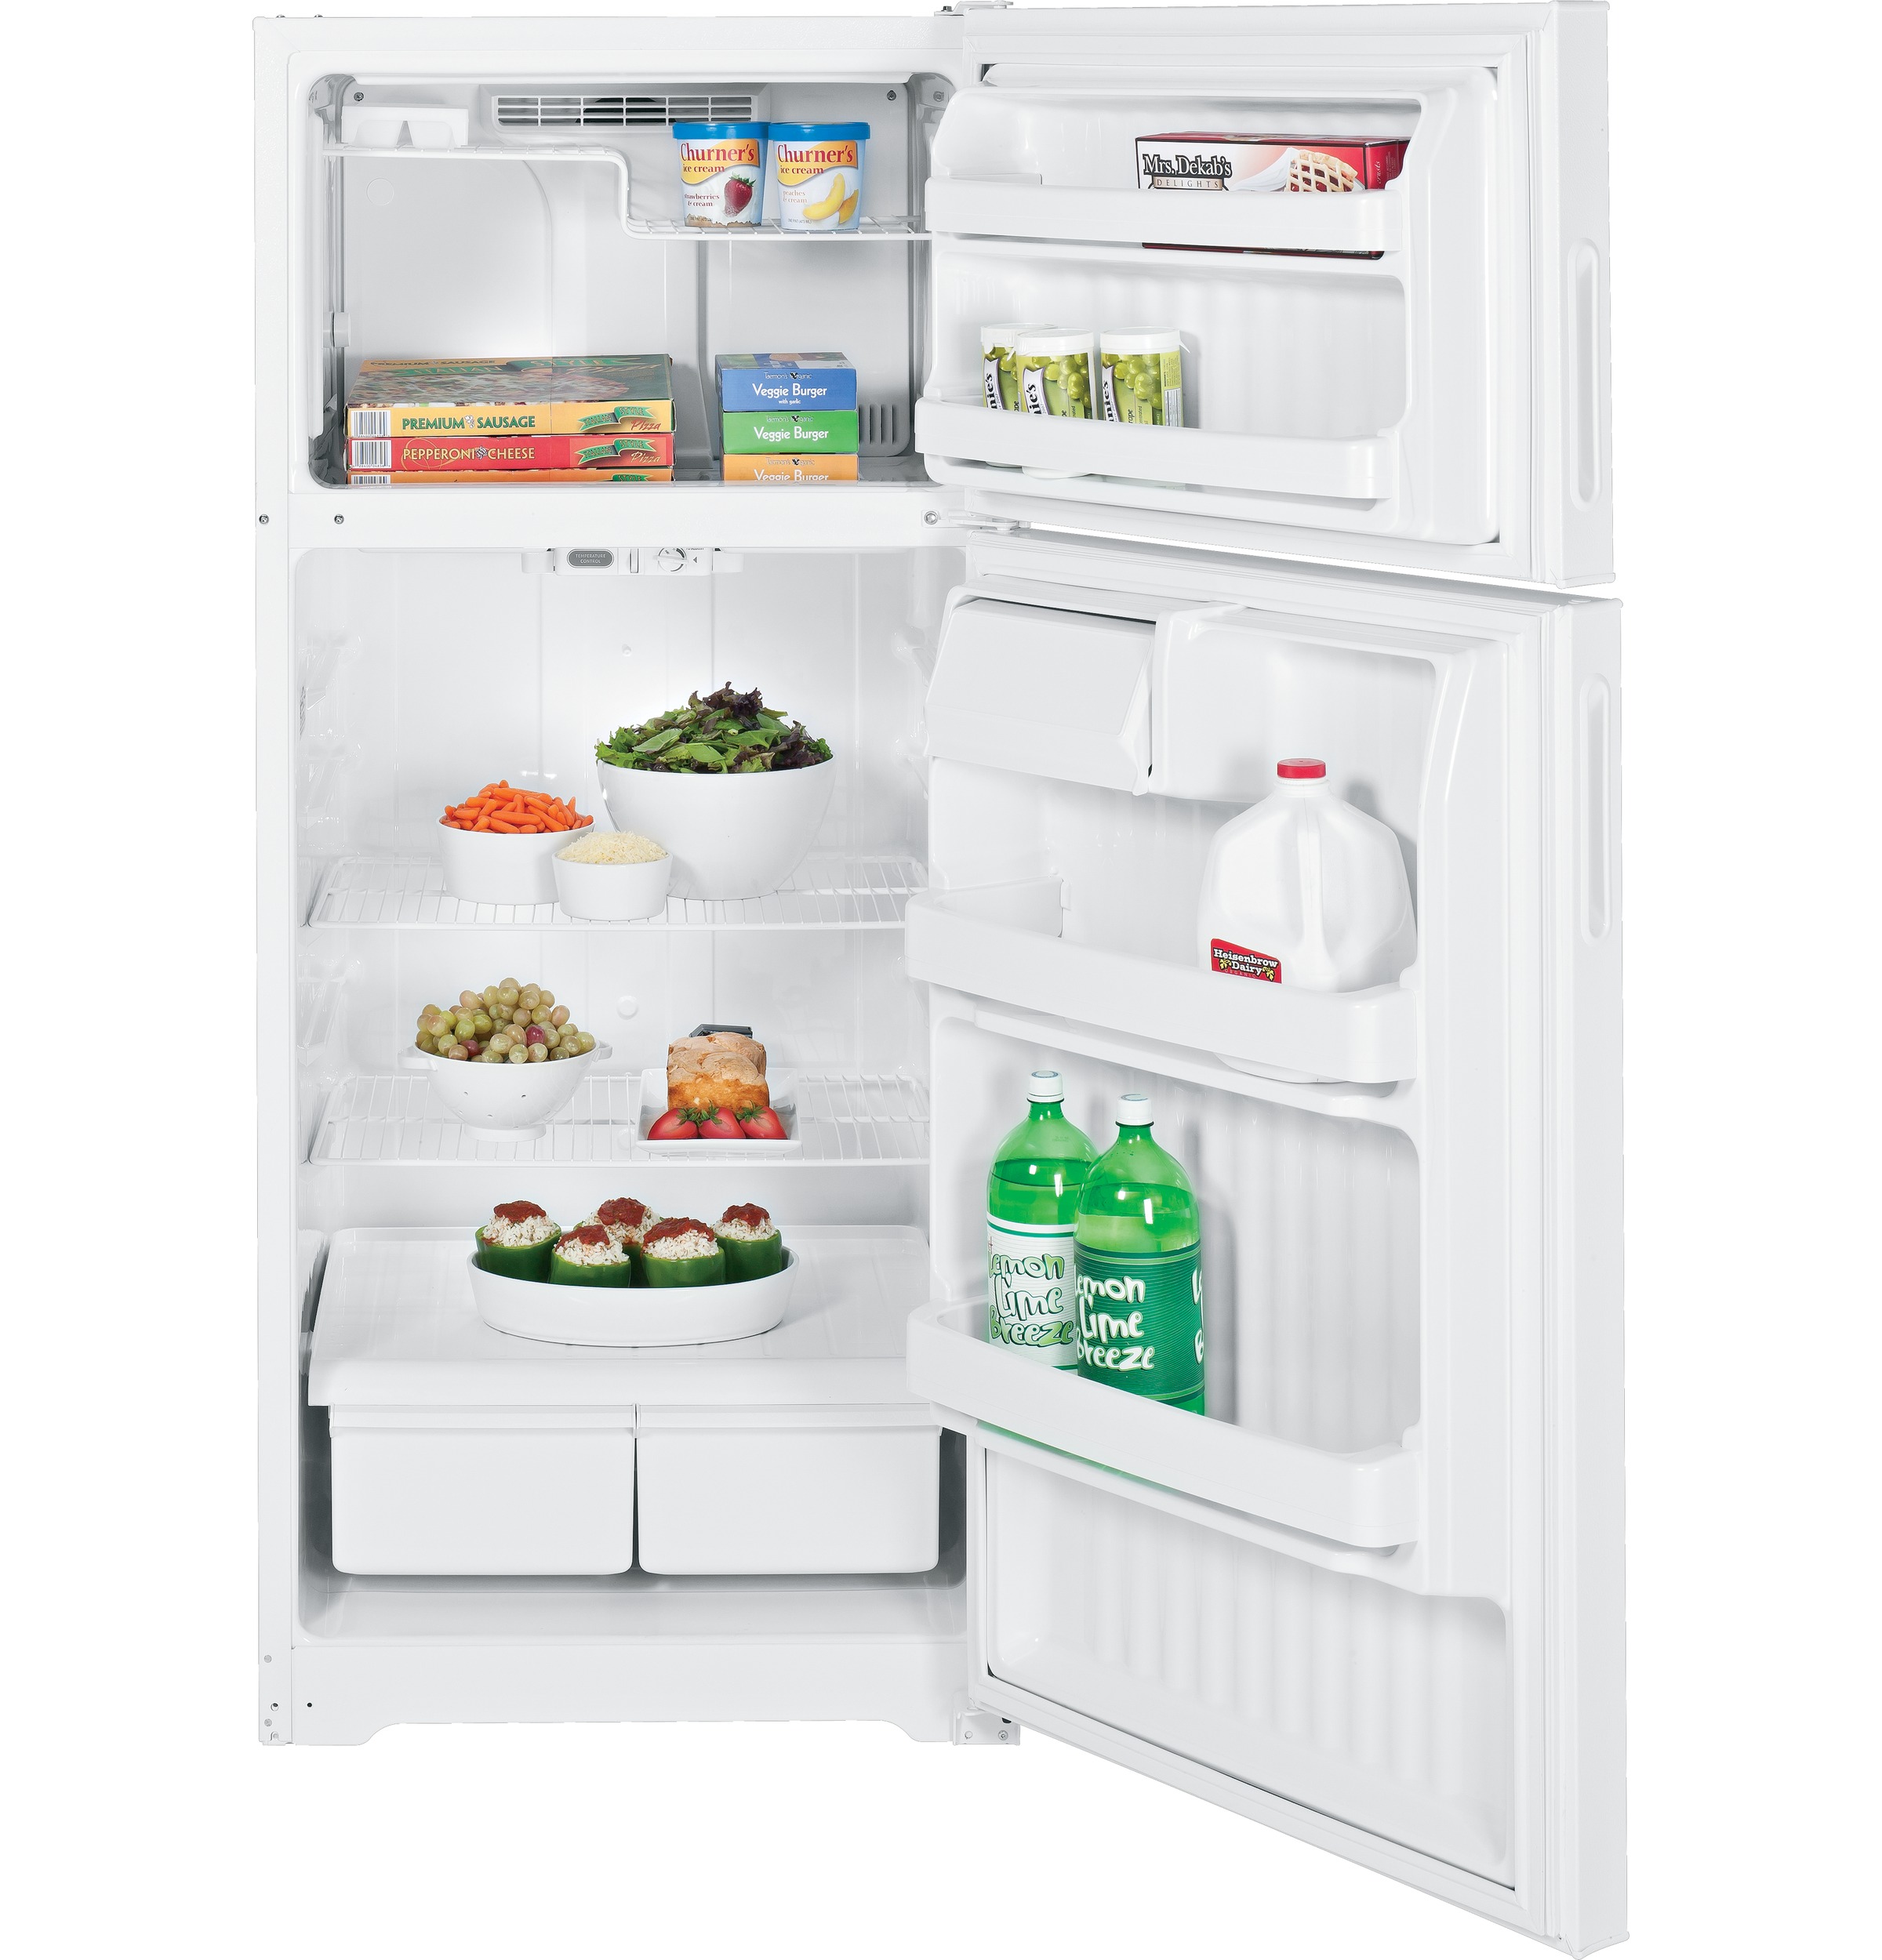 Hotpoint® ENERGY STAR® 16.5 Cu. Ft. Top-Freezer Refrigerator